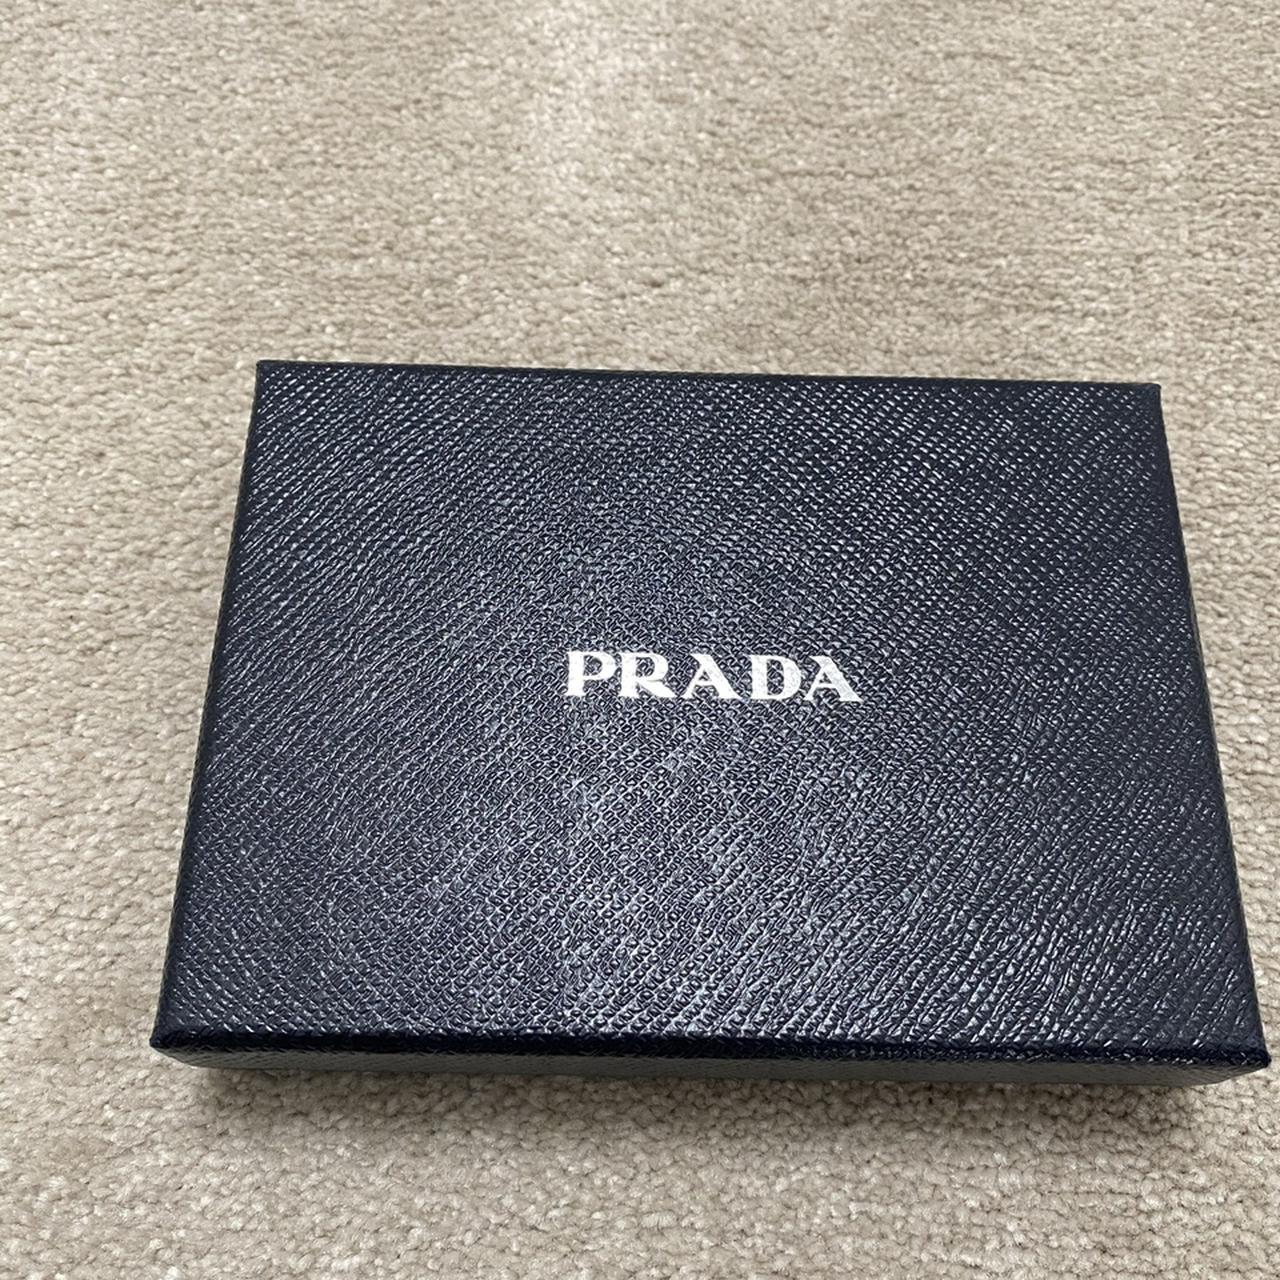 Prada Leather Passport Holder Message if interested - Depop